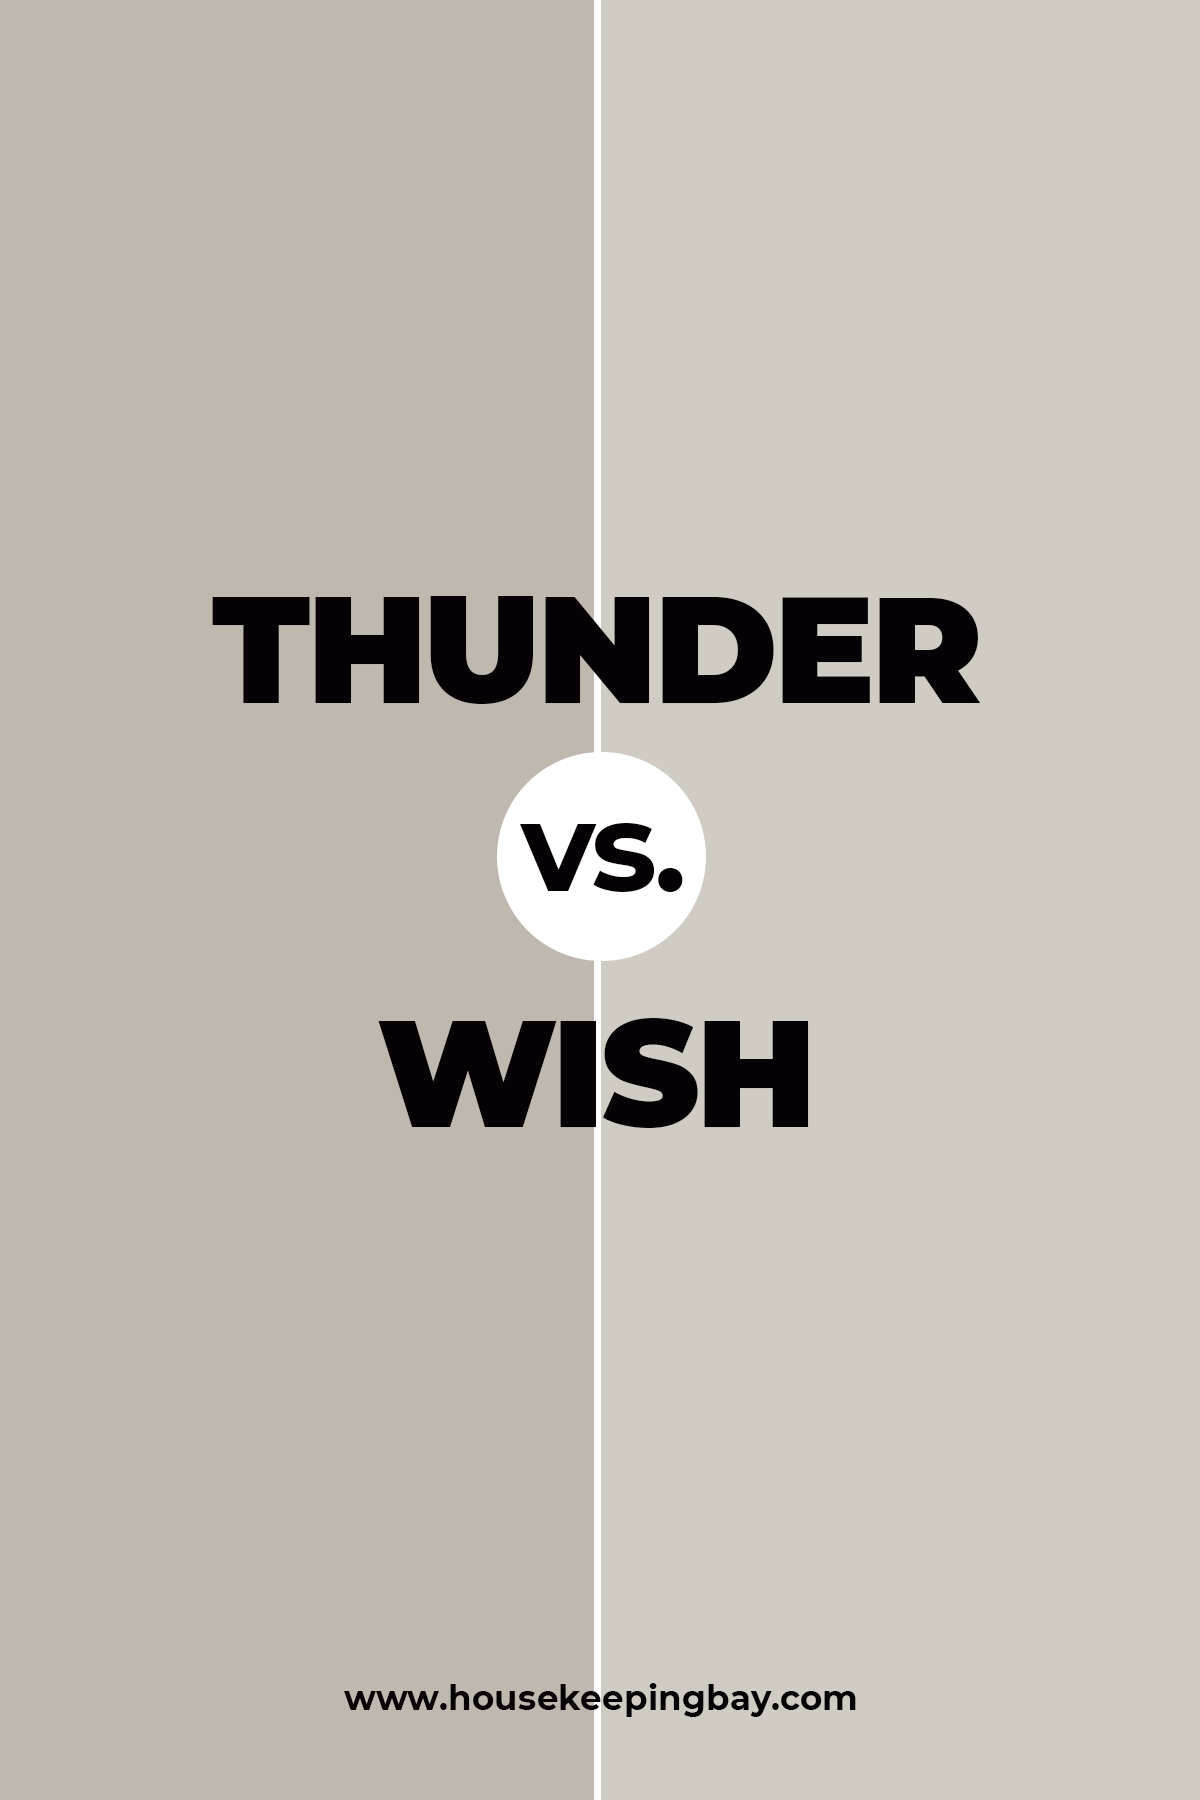 Thunder vs. Wish